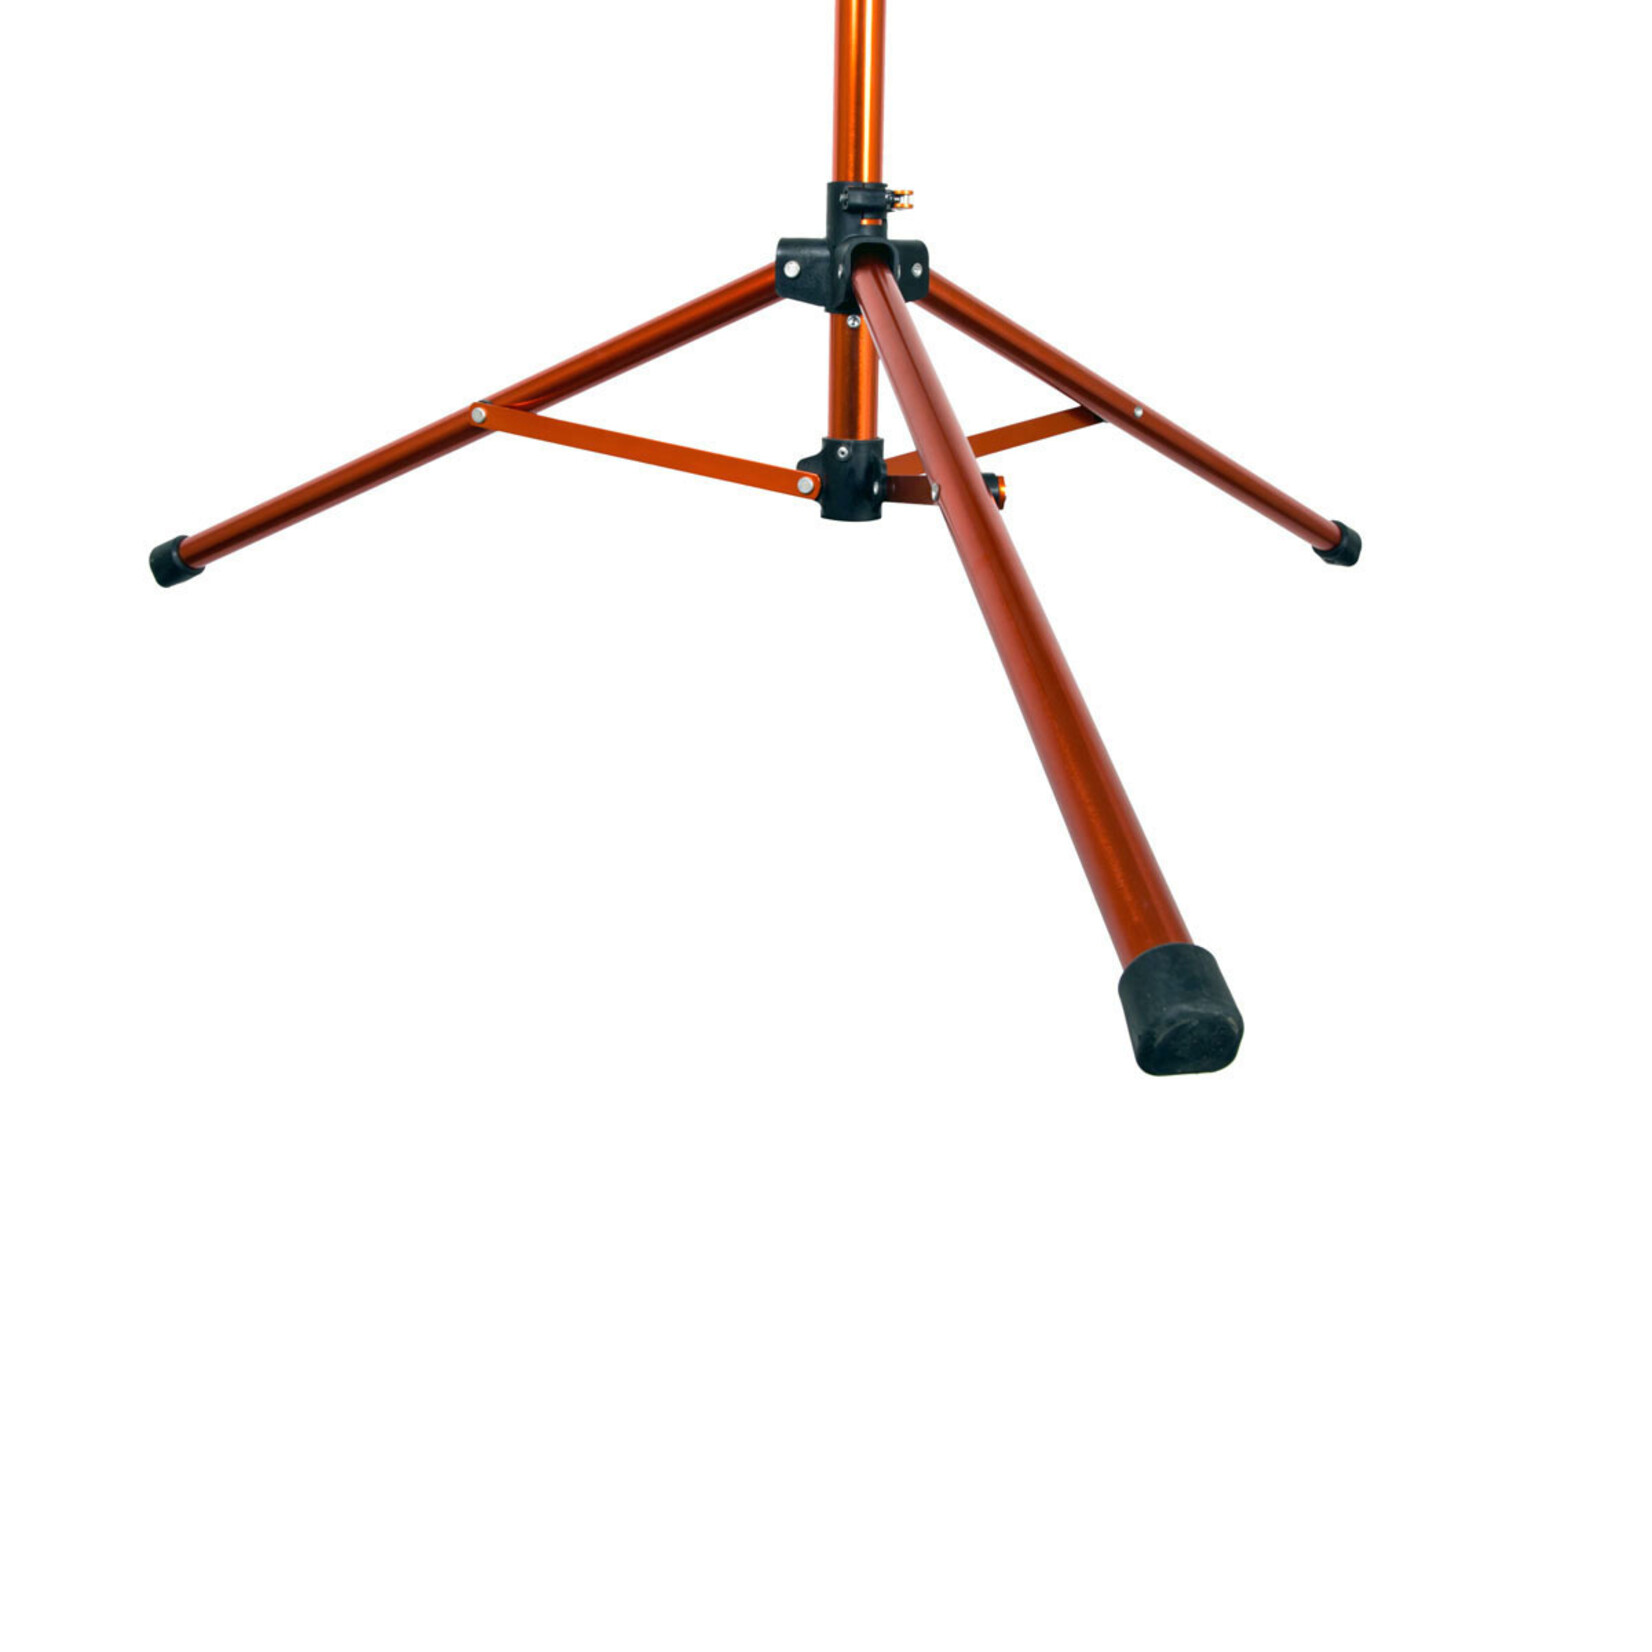 Kuat Tri Doc - Trail Doc Stand - Orange Anodize